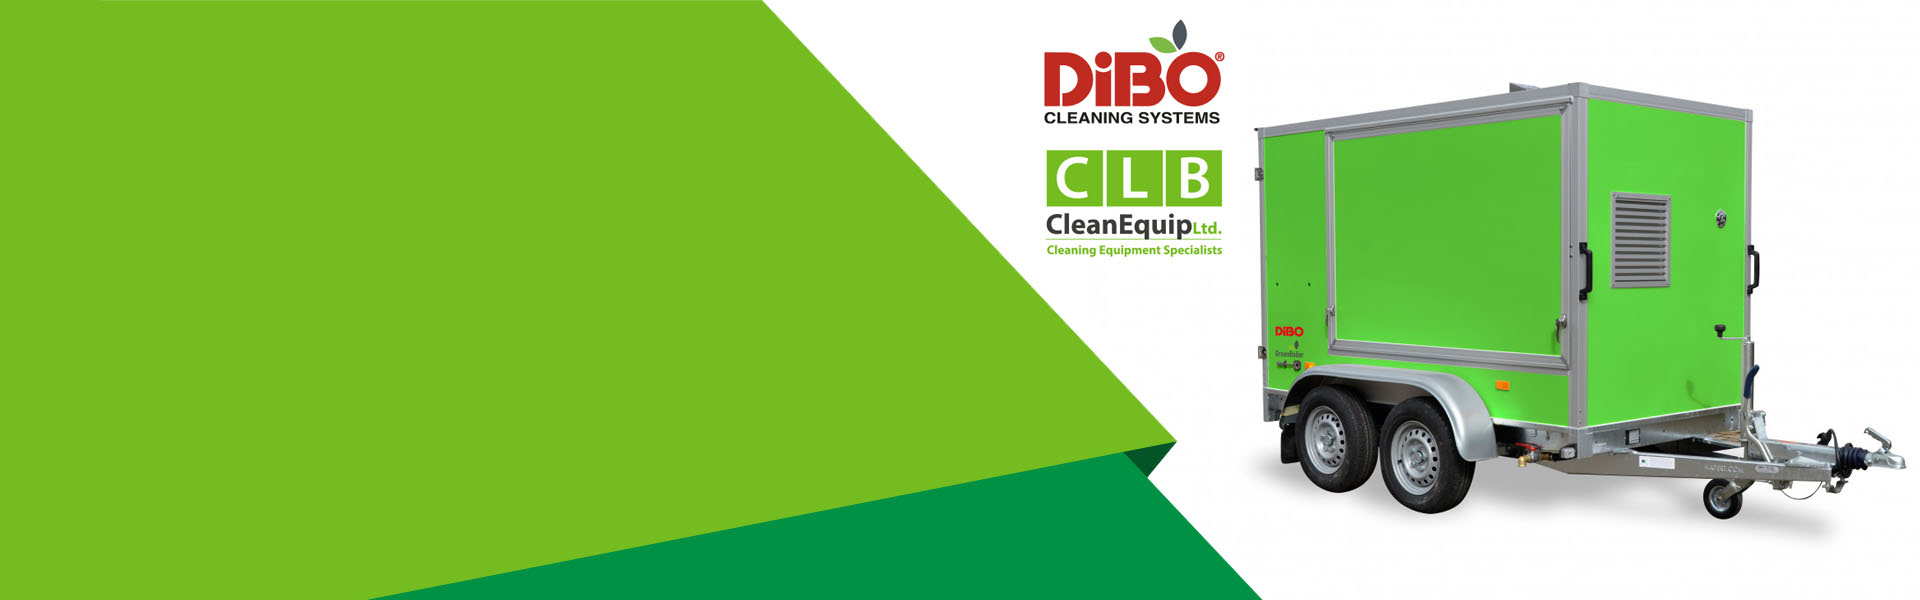 DiBO JMB-C+ Heavy Cleaning Hot Water Pressure Washer Trailer